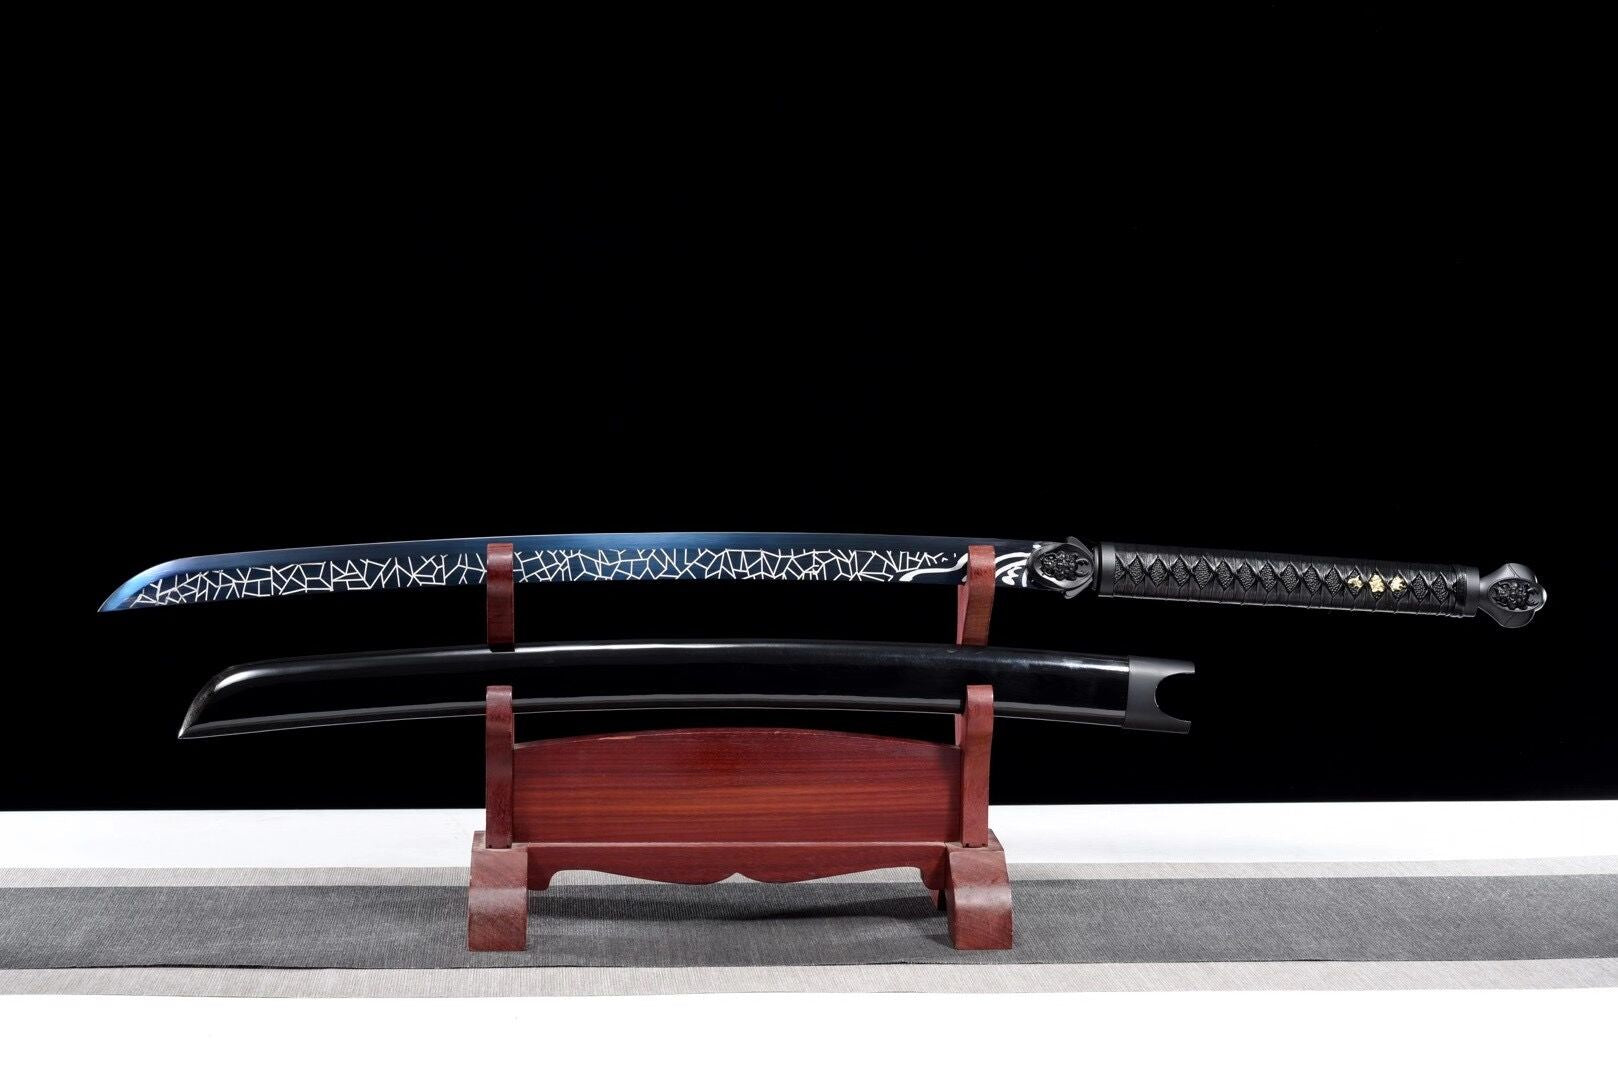 Magic Blade,Thousand shard demon dagger,Handmade Chinese Sword, High-performance spring steel, Longquan sword